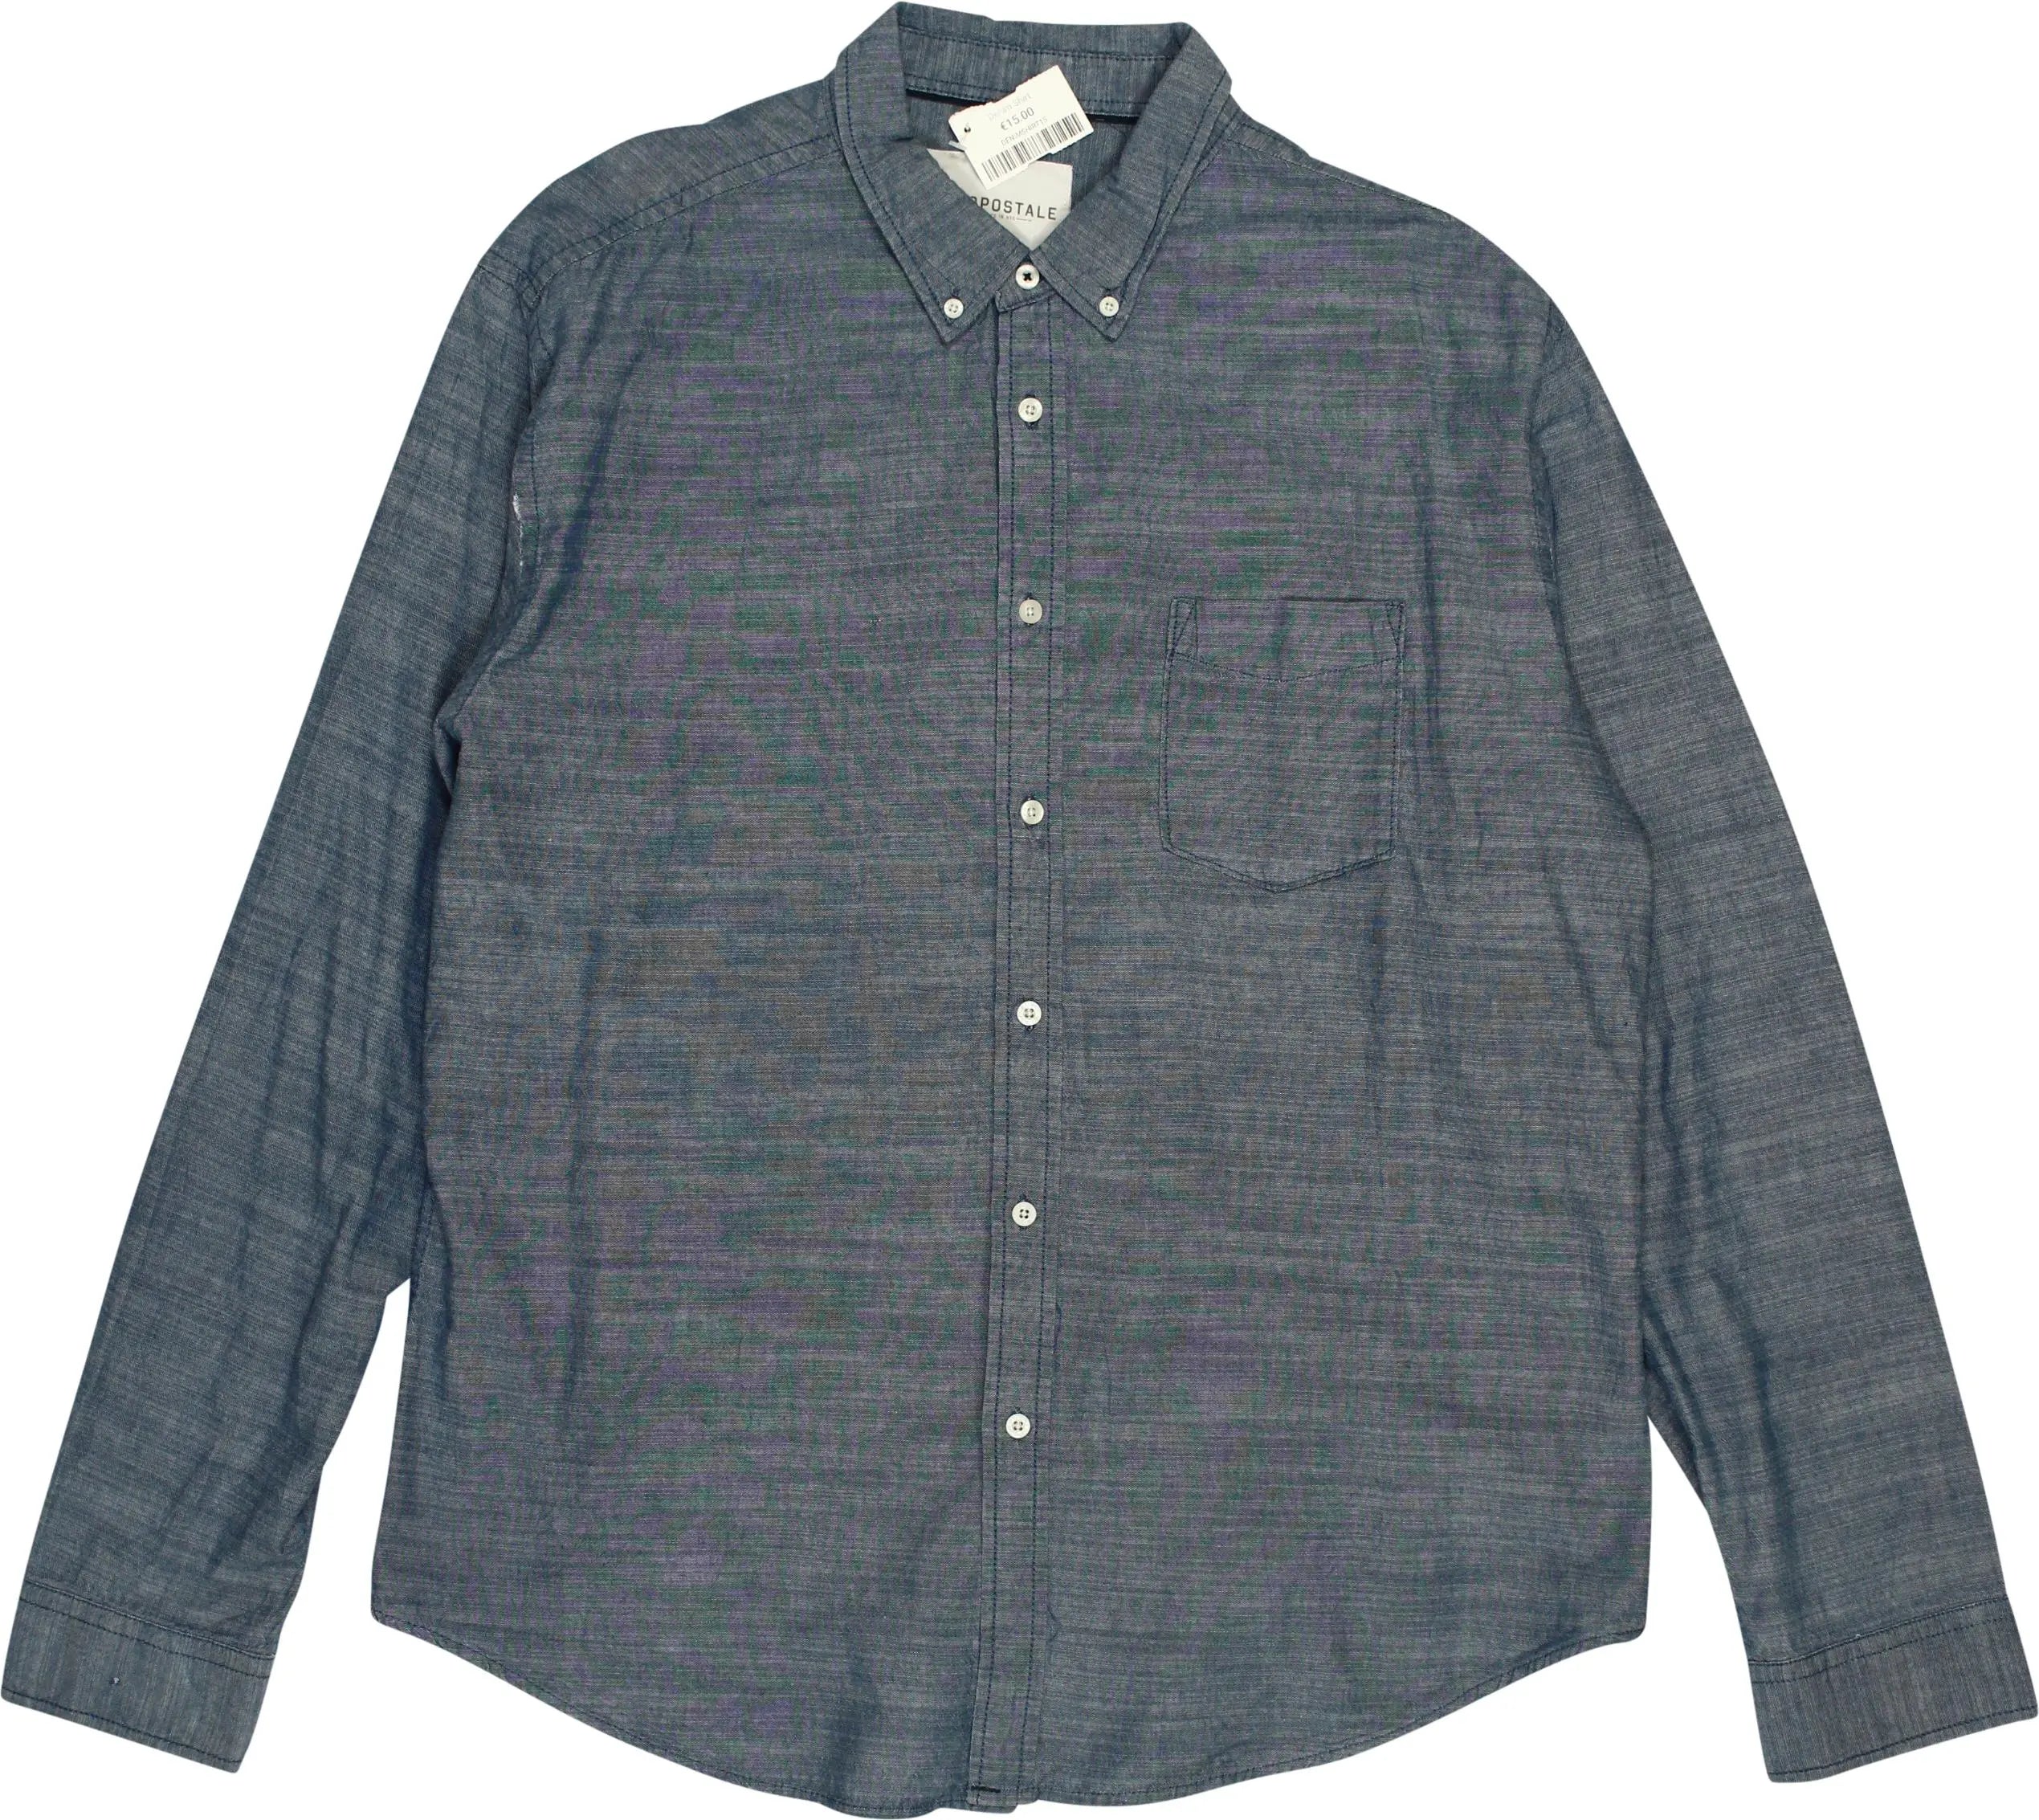 Aéropostale - Denim Shirt- ThriftTale.com - Vintage and second handclothing